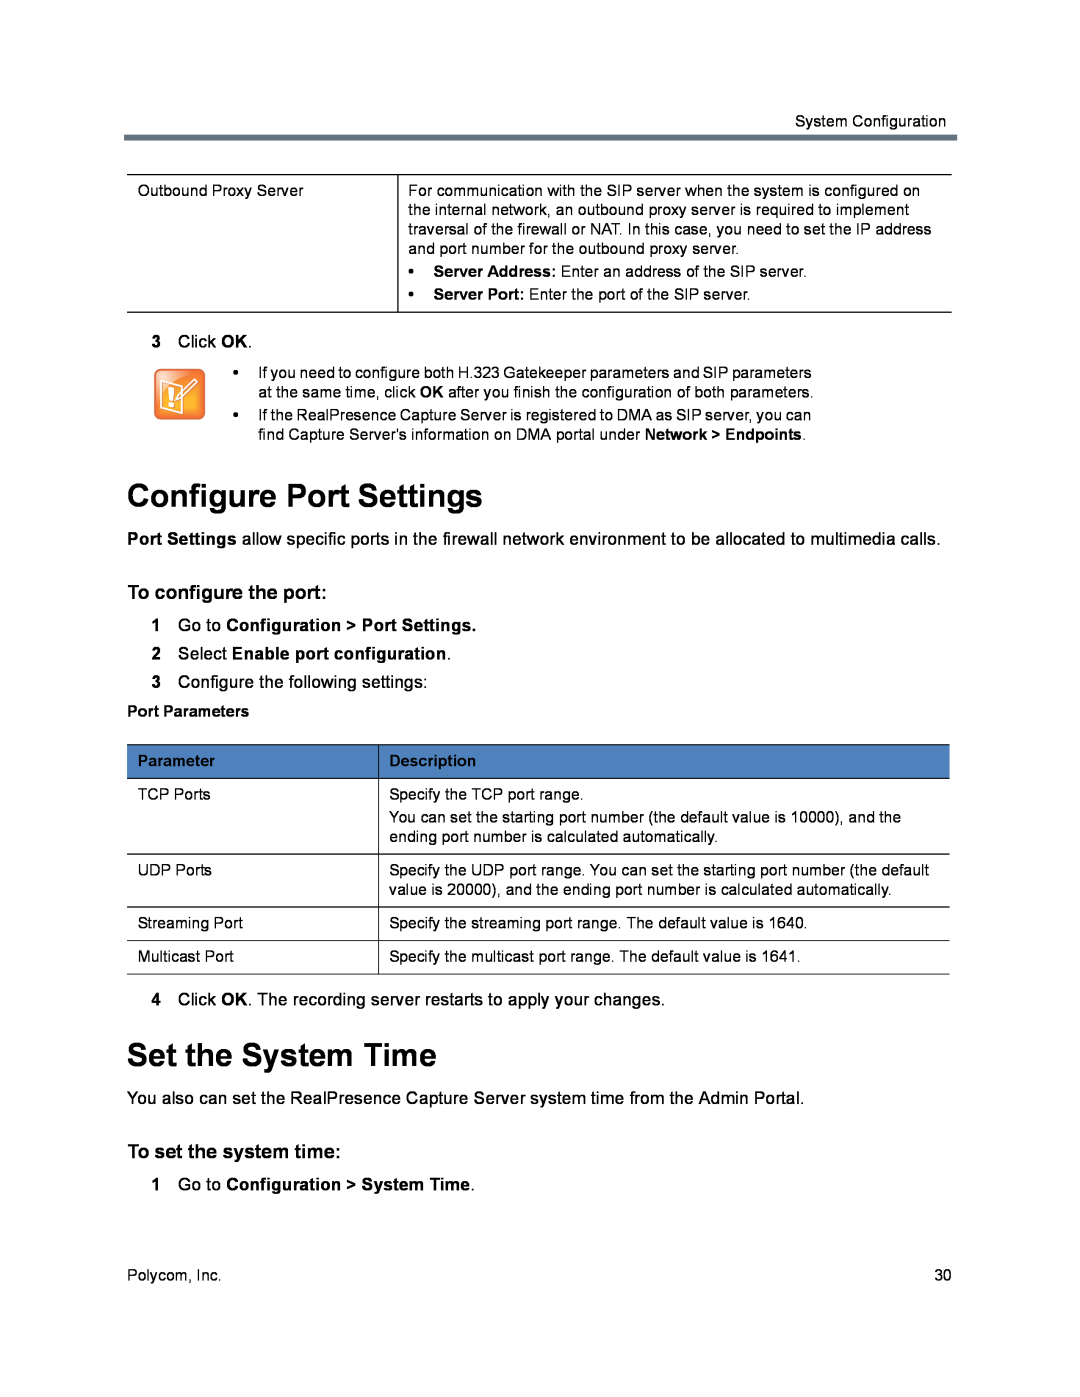 Polycom 40/0 Configure Port Settings, Set the System Time, To configure the port, To set the system time, Port Parameters 